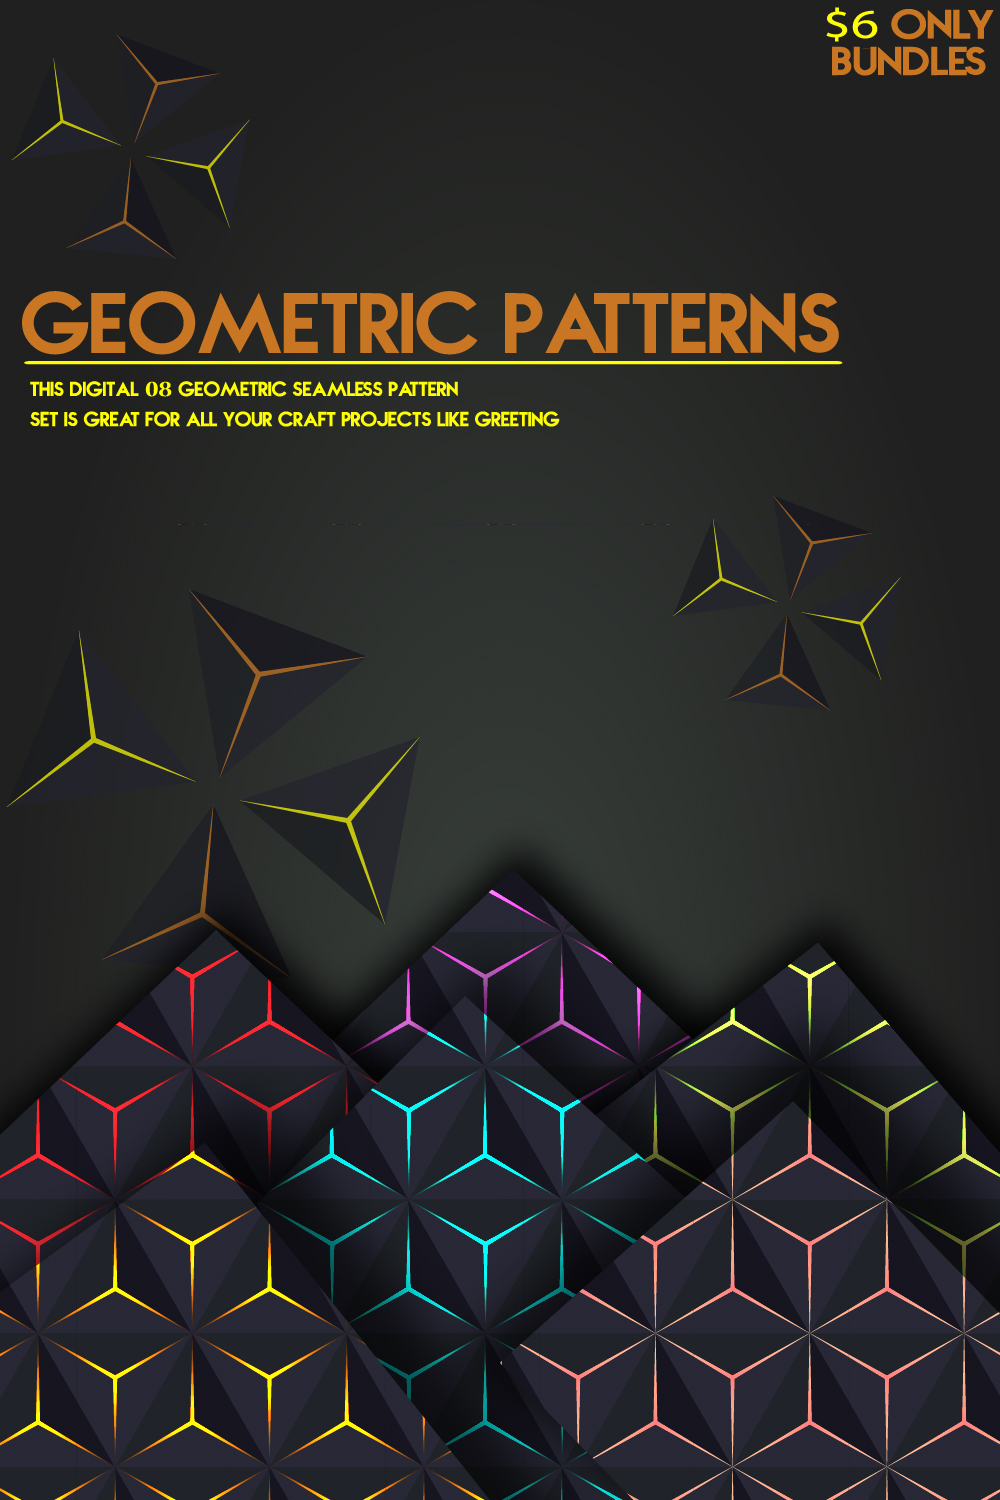 Geometric 3D Seamless Patterns pinterest image.